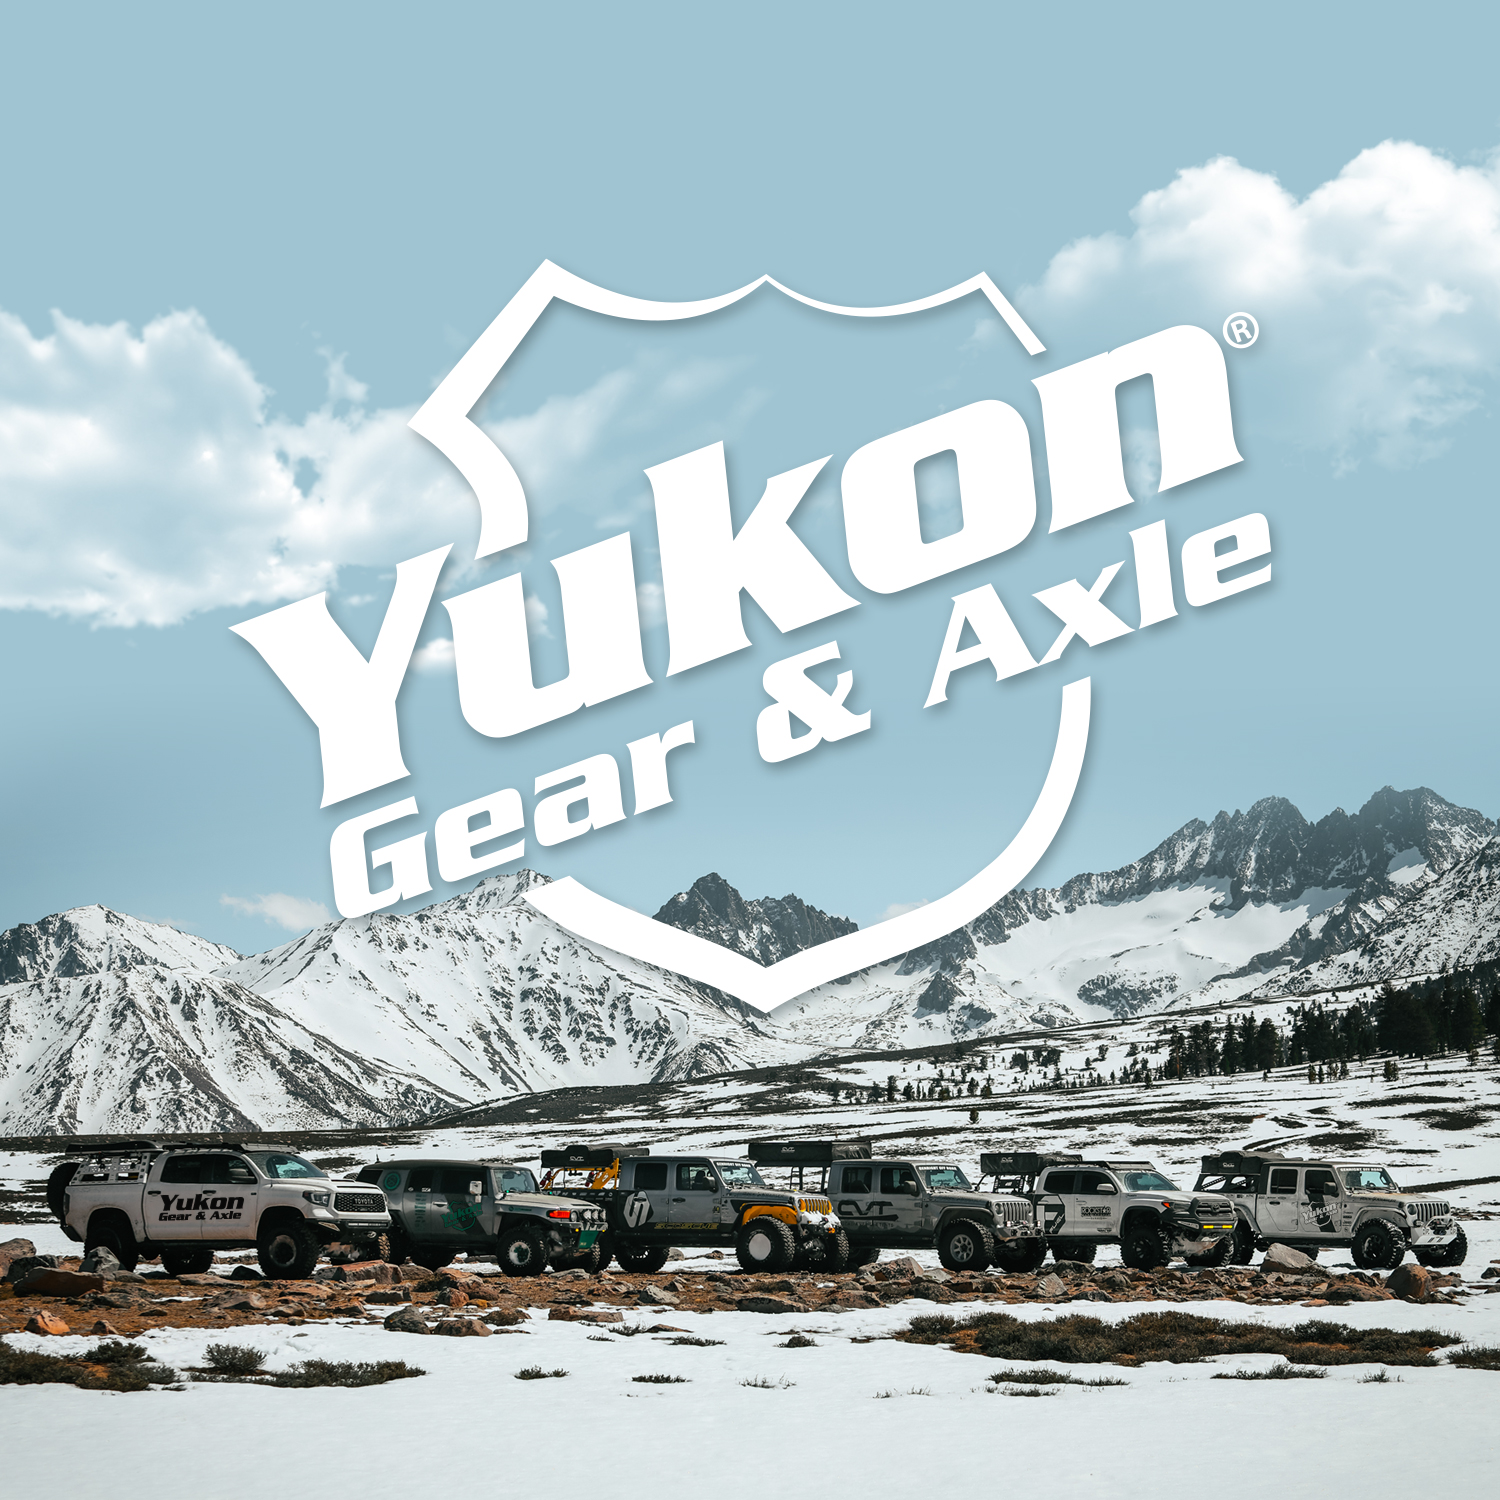 Yukon high performance Ring & Pinion set, 2010-down Chrysler 9.25", 4.11 ratio 